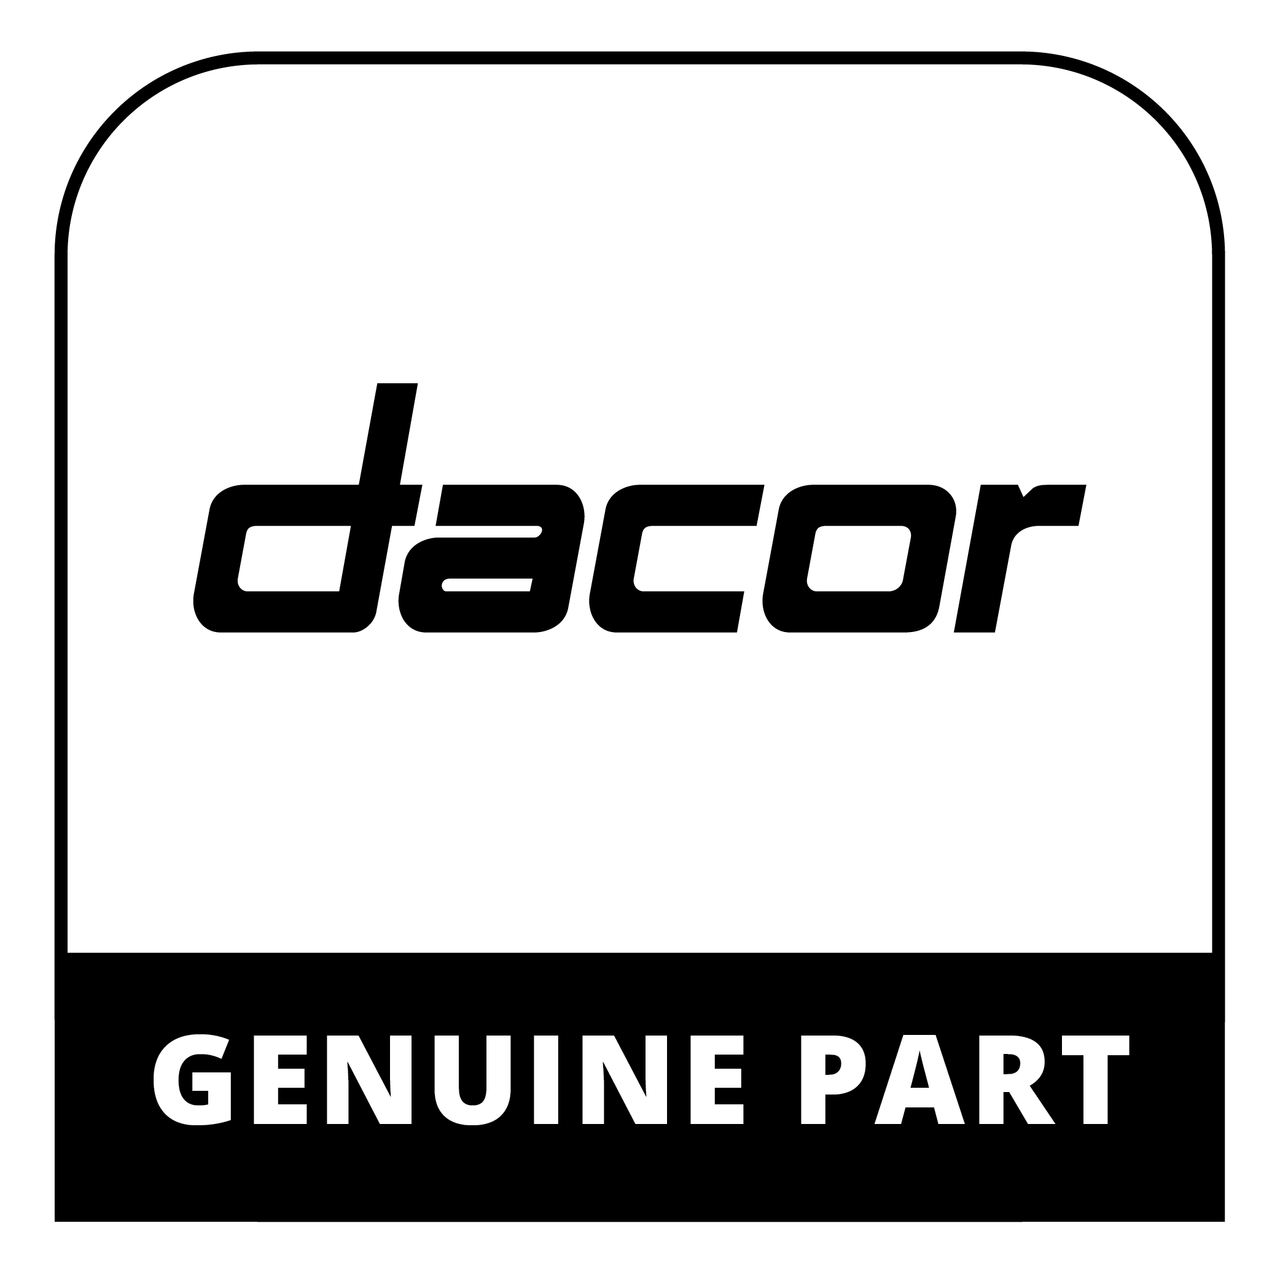 Dacor 100382 - 22 Ga VIT, 33.062x27.25" - Genuine Dacor Part